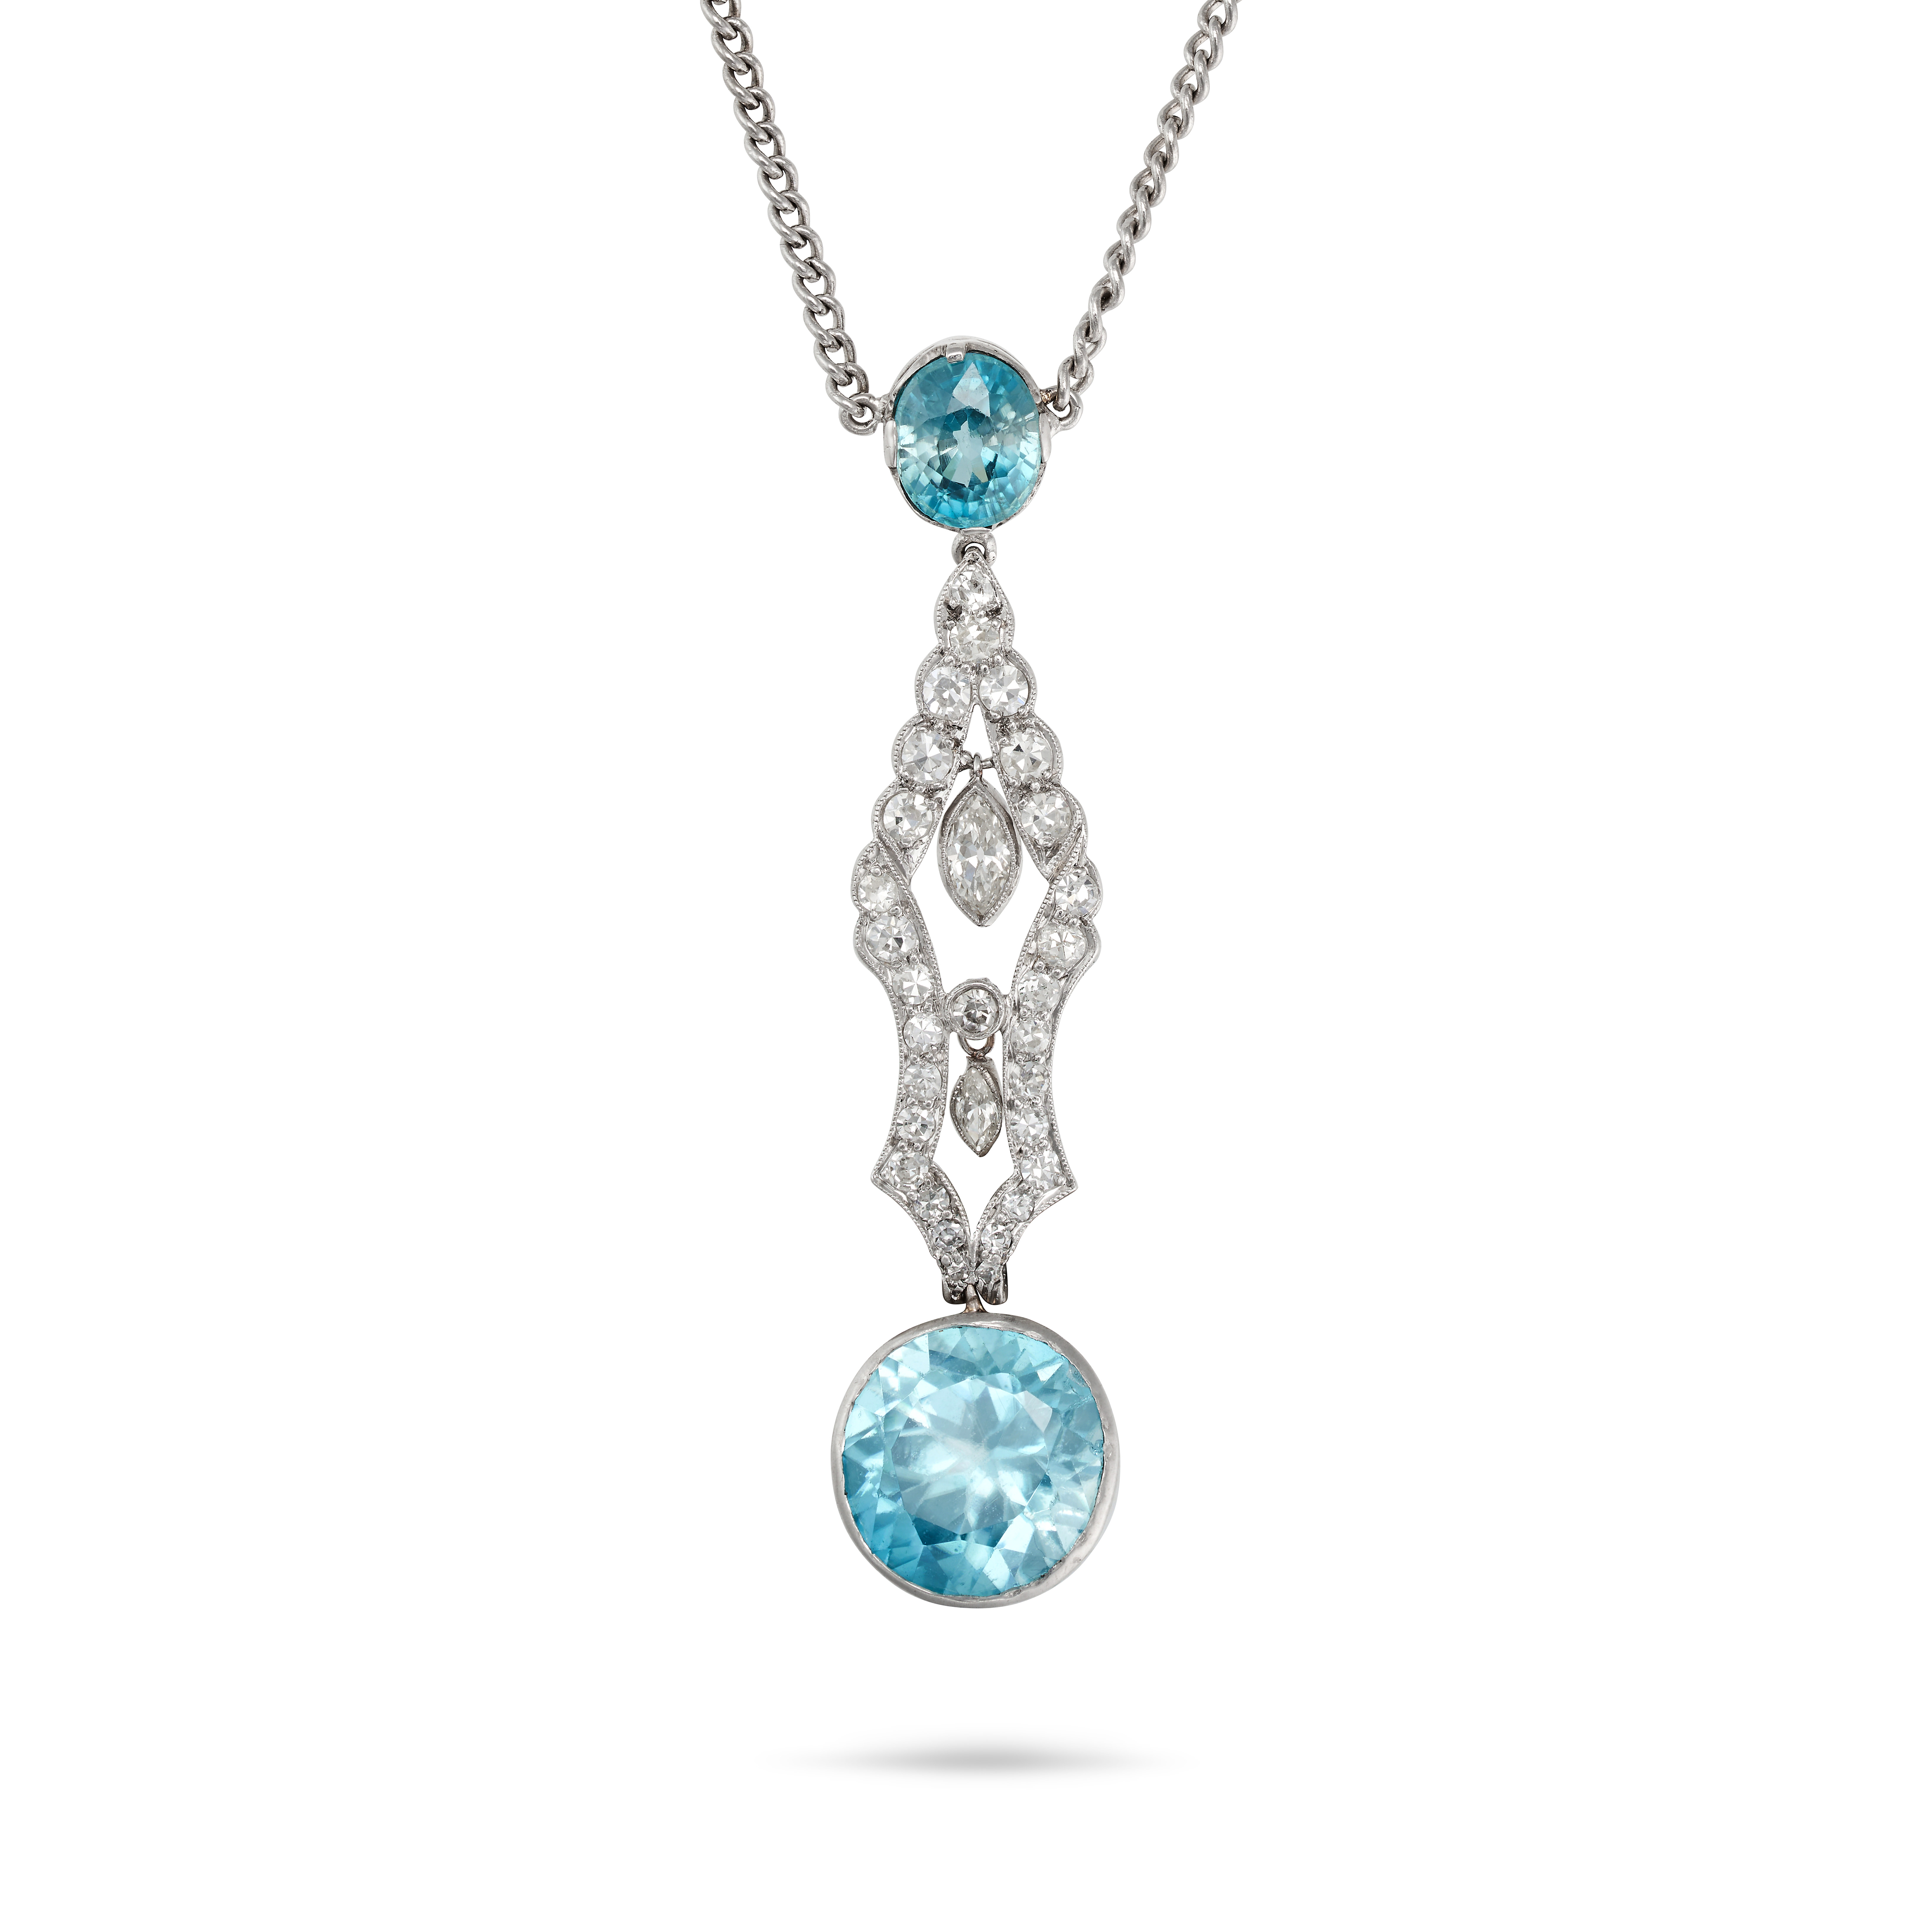 A BLUE ZIRCON AND DIAMOND PENDANT NECKLACE the pendant set with an oval cut blue zircon suspendin...